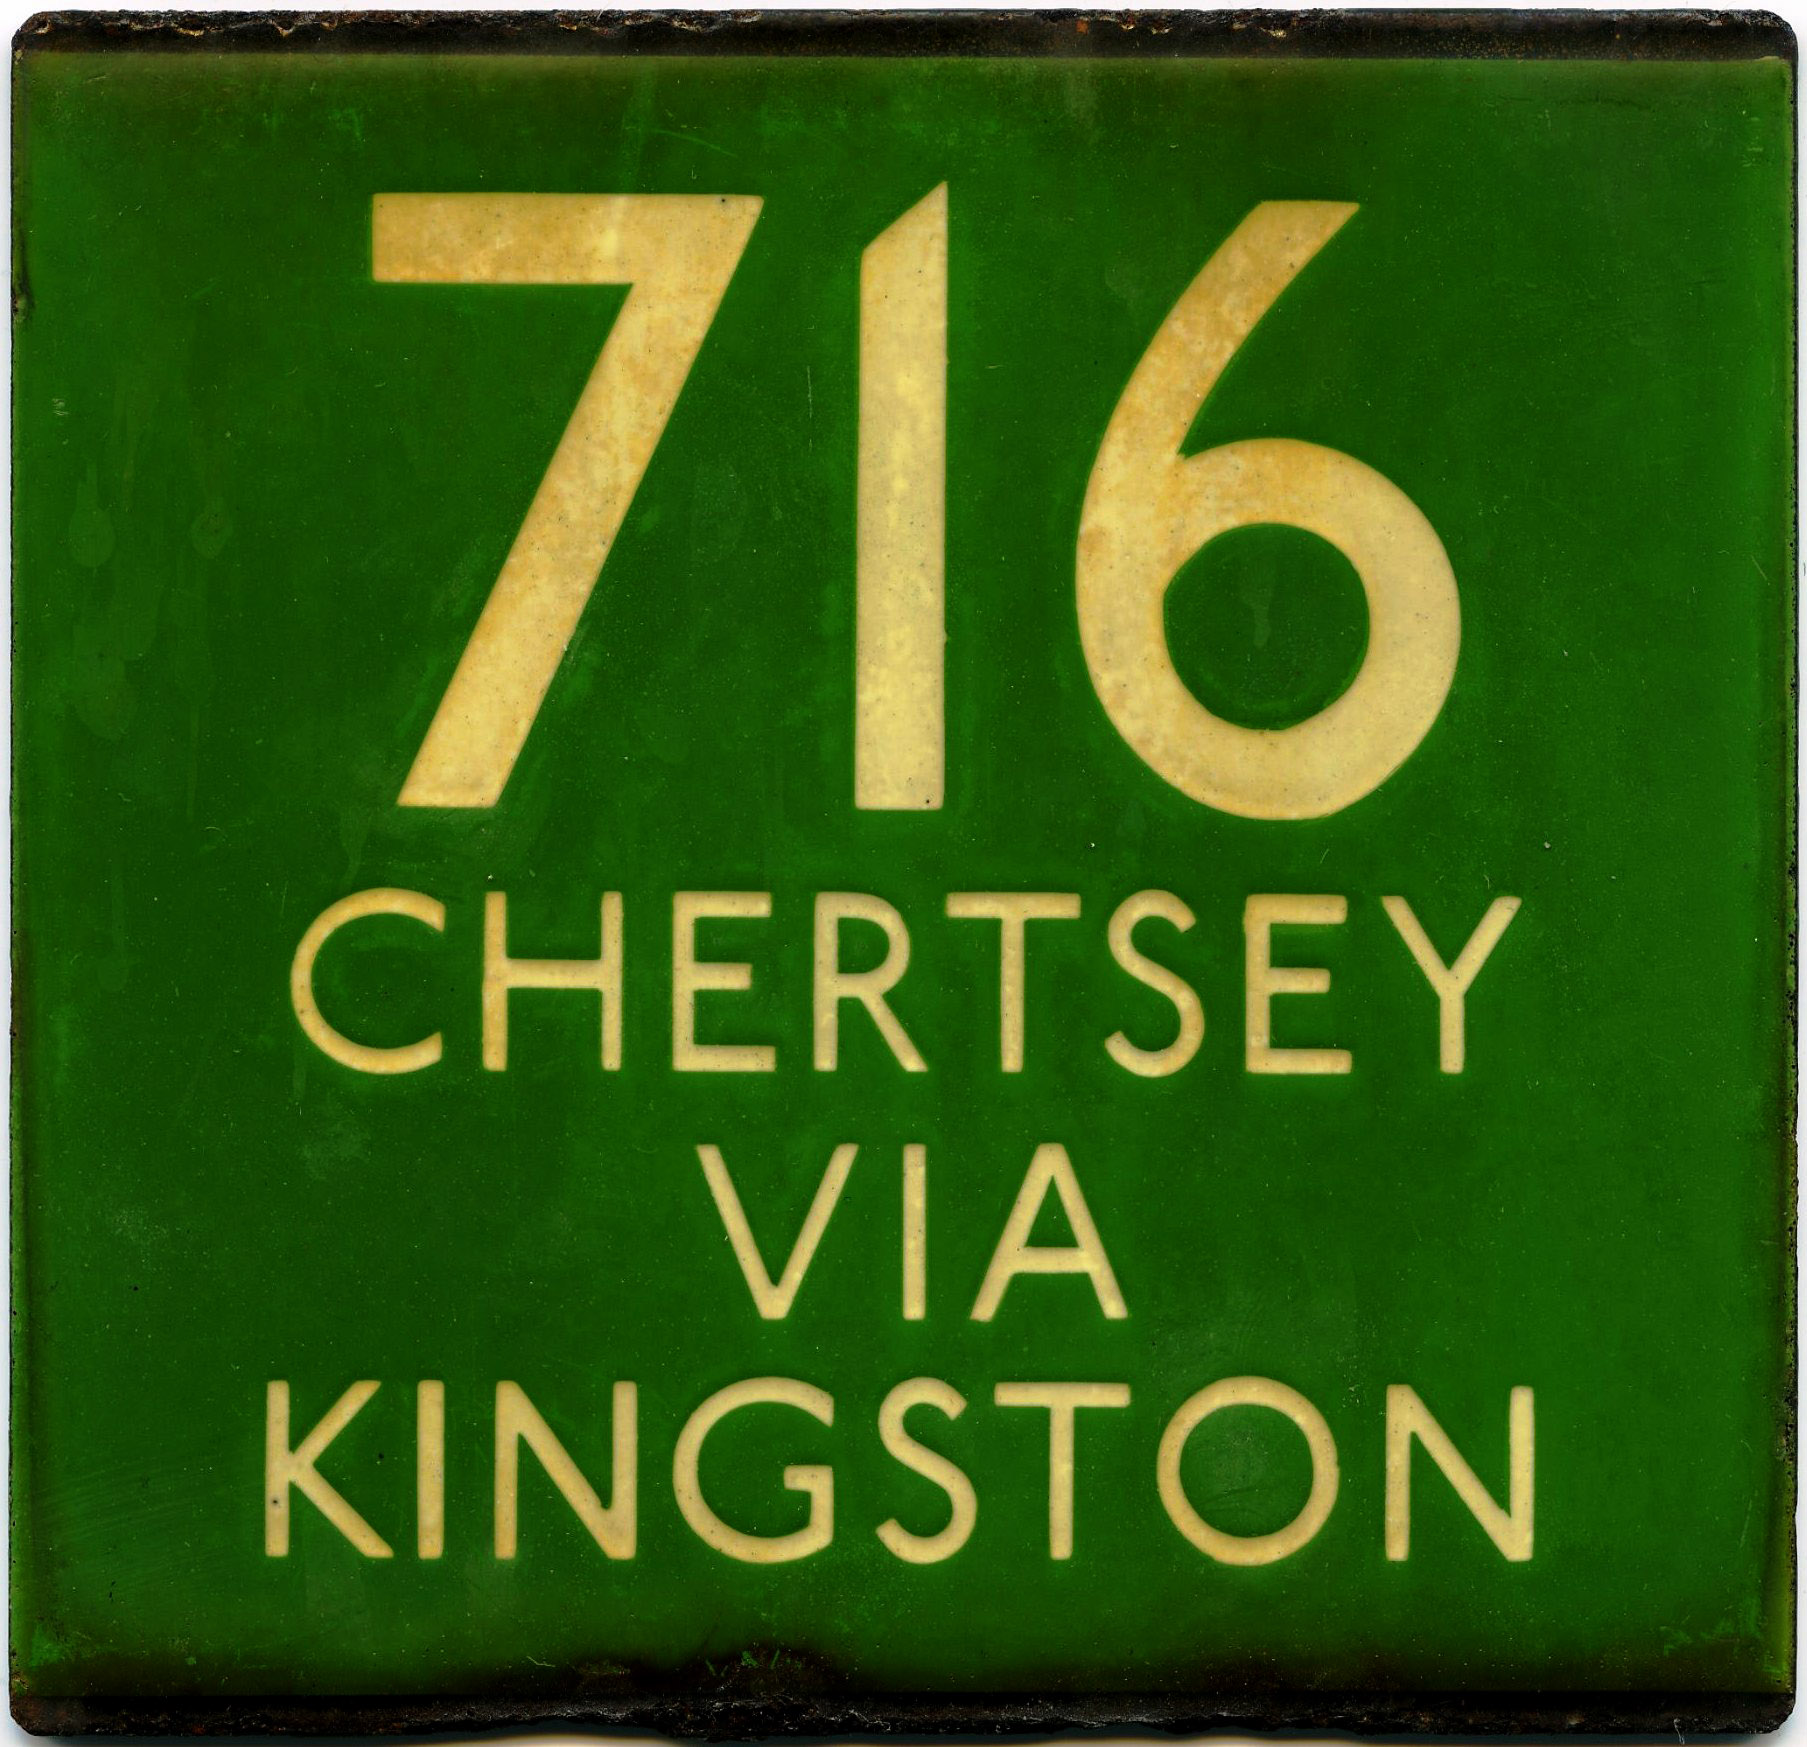 London Transport enamel coach stop E-PLATE for Green Line route 716 Chertsey via Kingston. This is